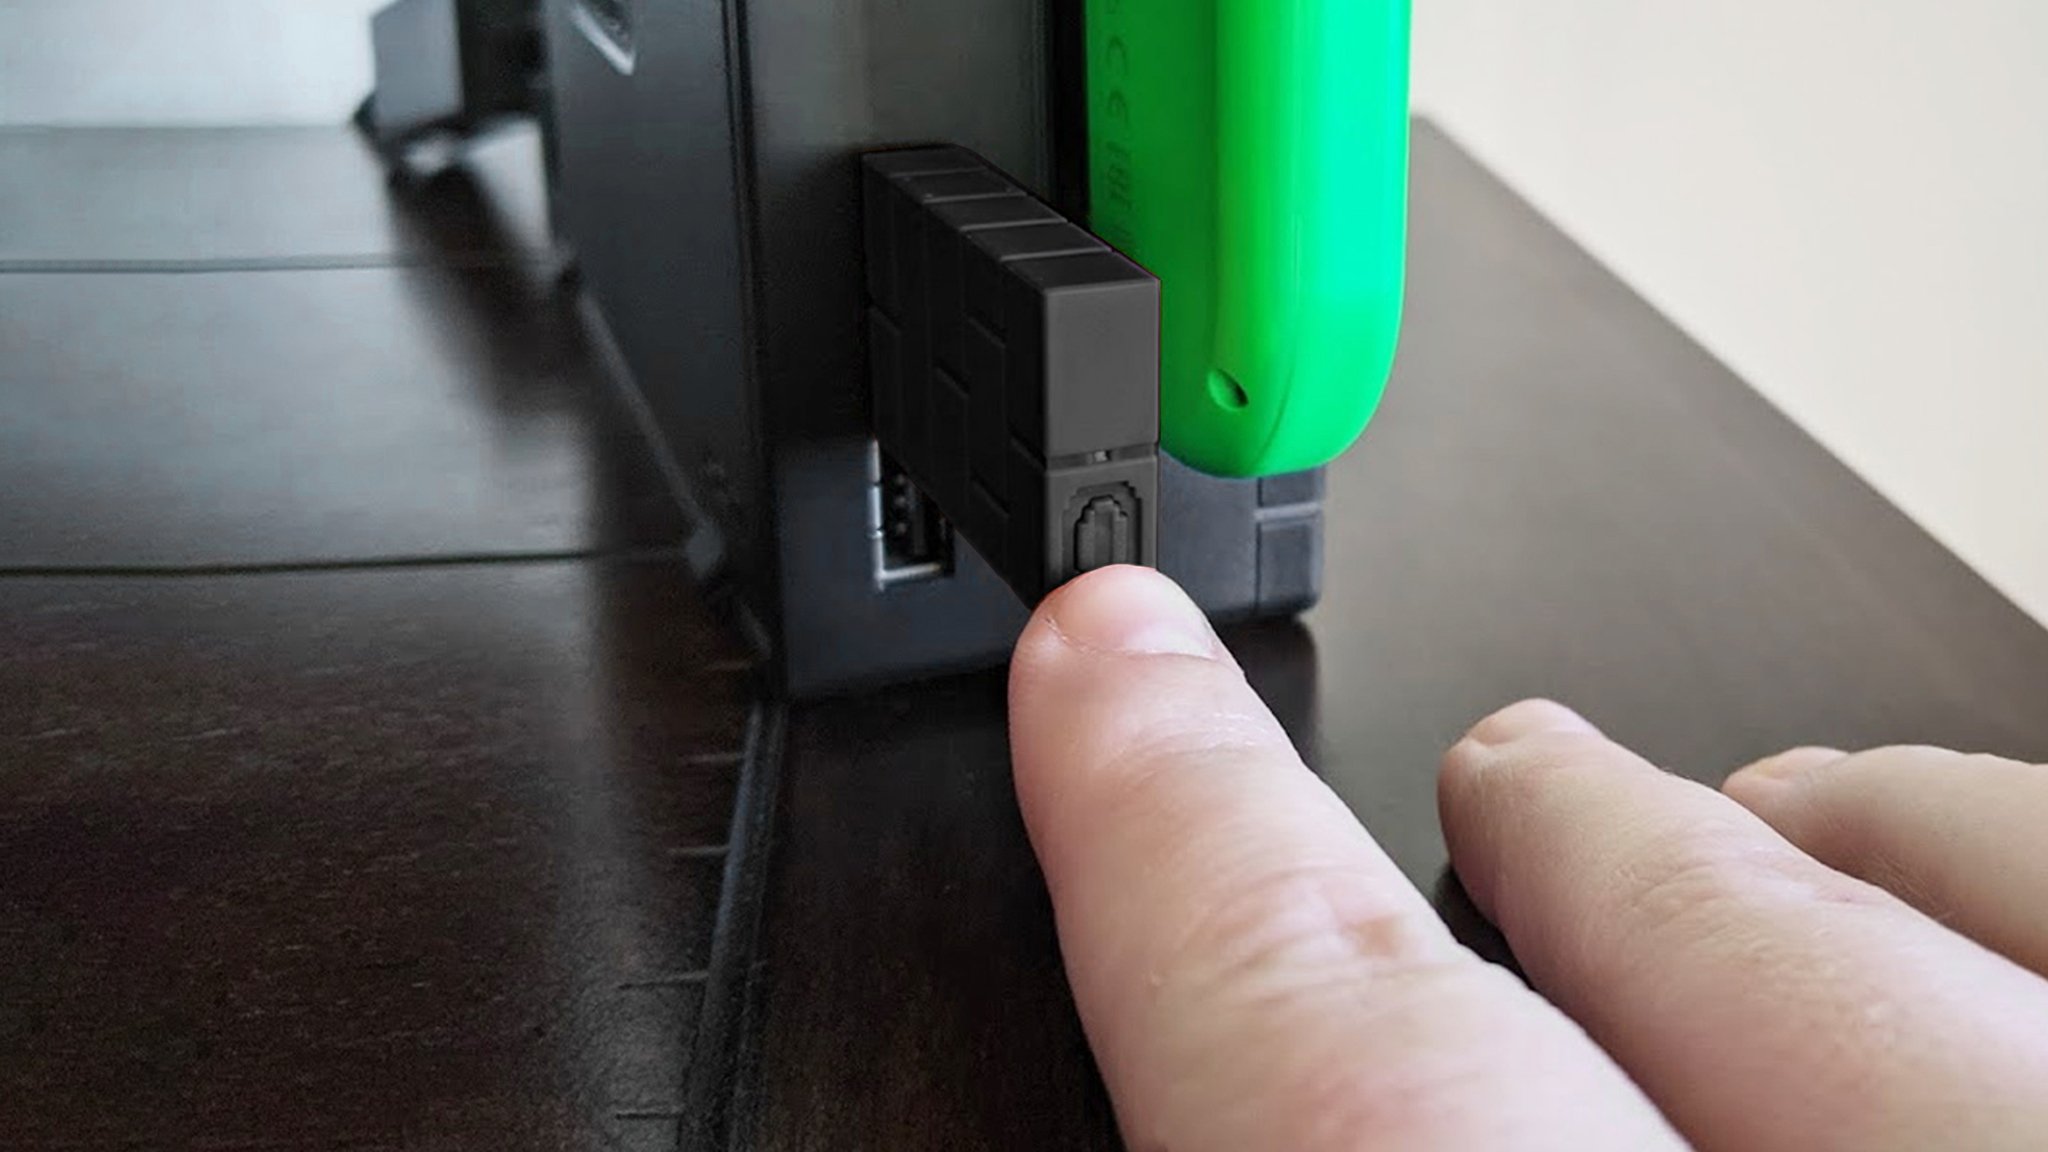 8bitdo Usb Adapter In Nintendo Switch Pushing Button Black